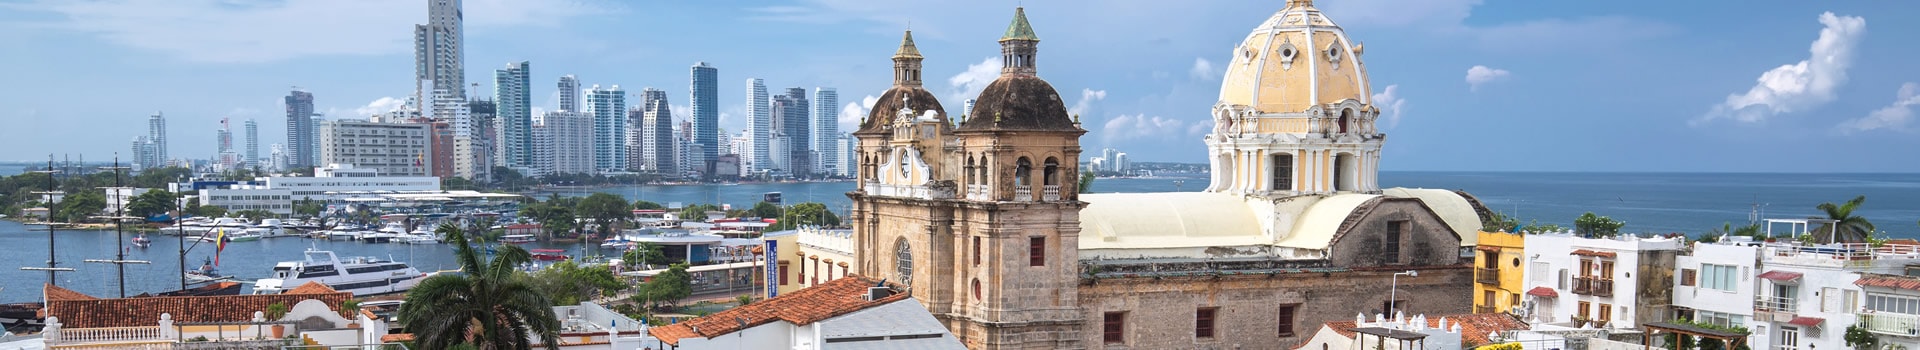 Málaga - Cartagena de indias